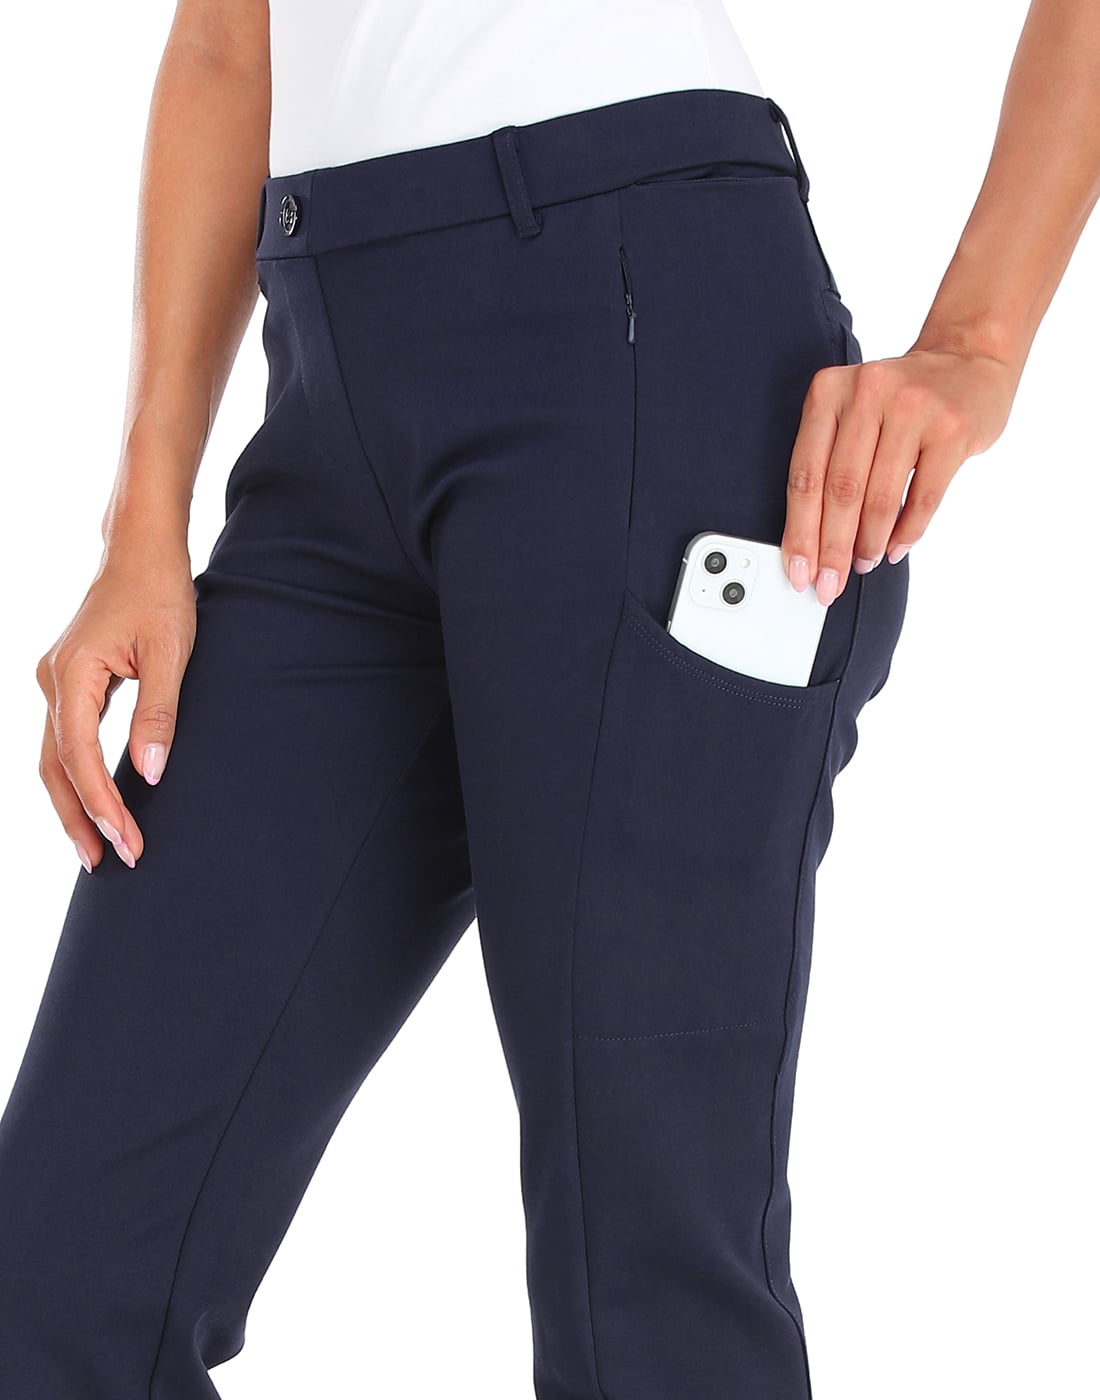 HDE Yoga Dress Pants for Women Straight Leg Pull On Pants with 8 Pockets  Khaki - M Short